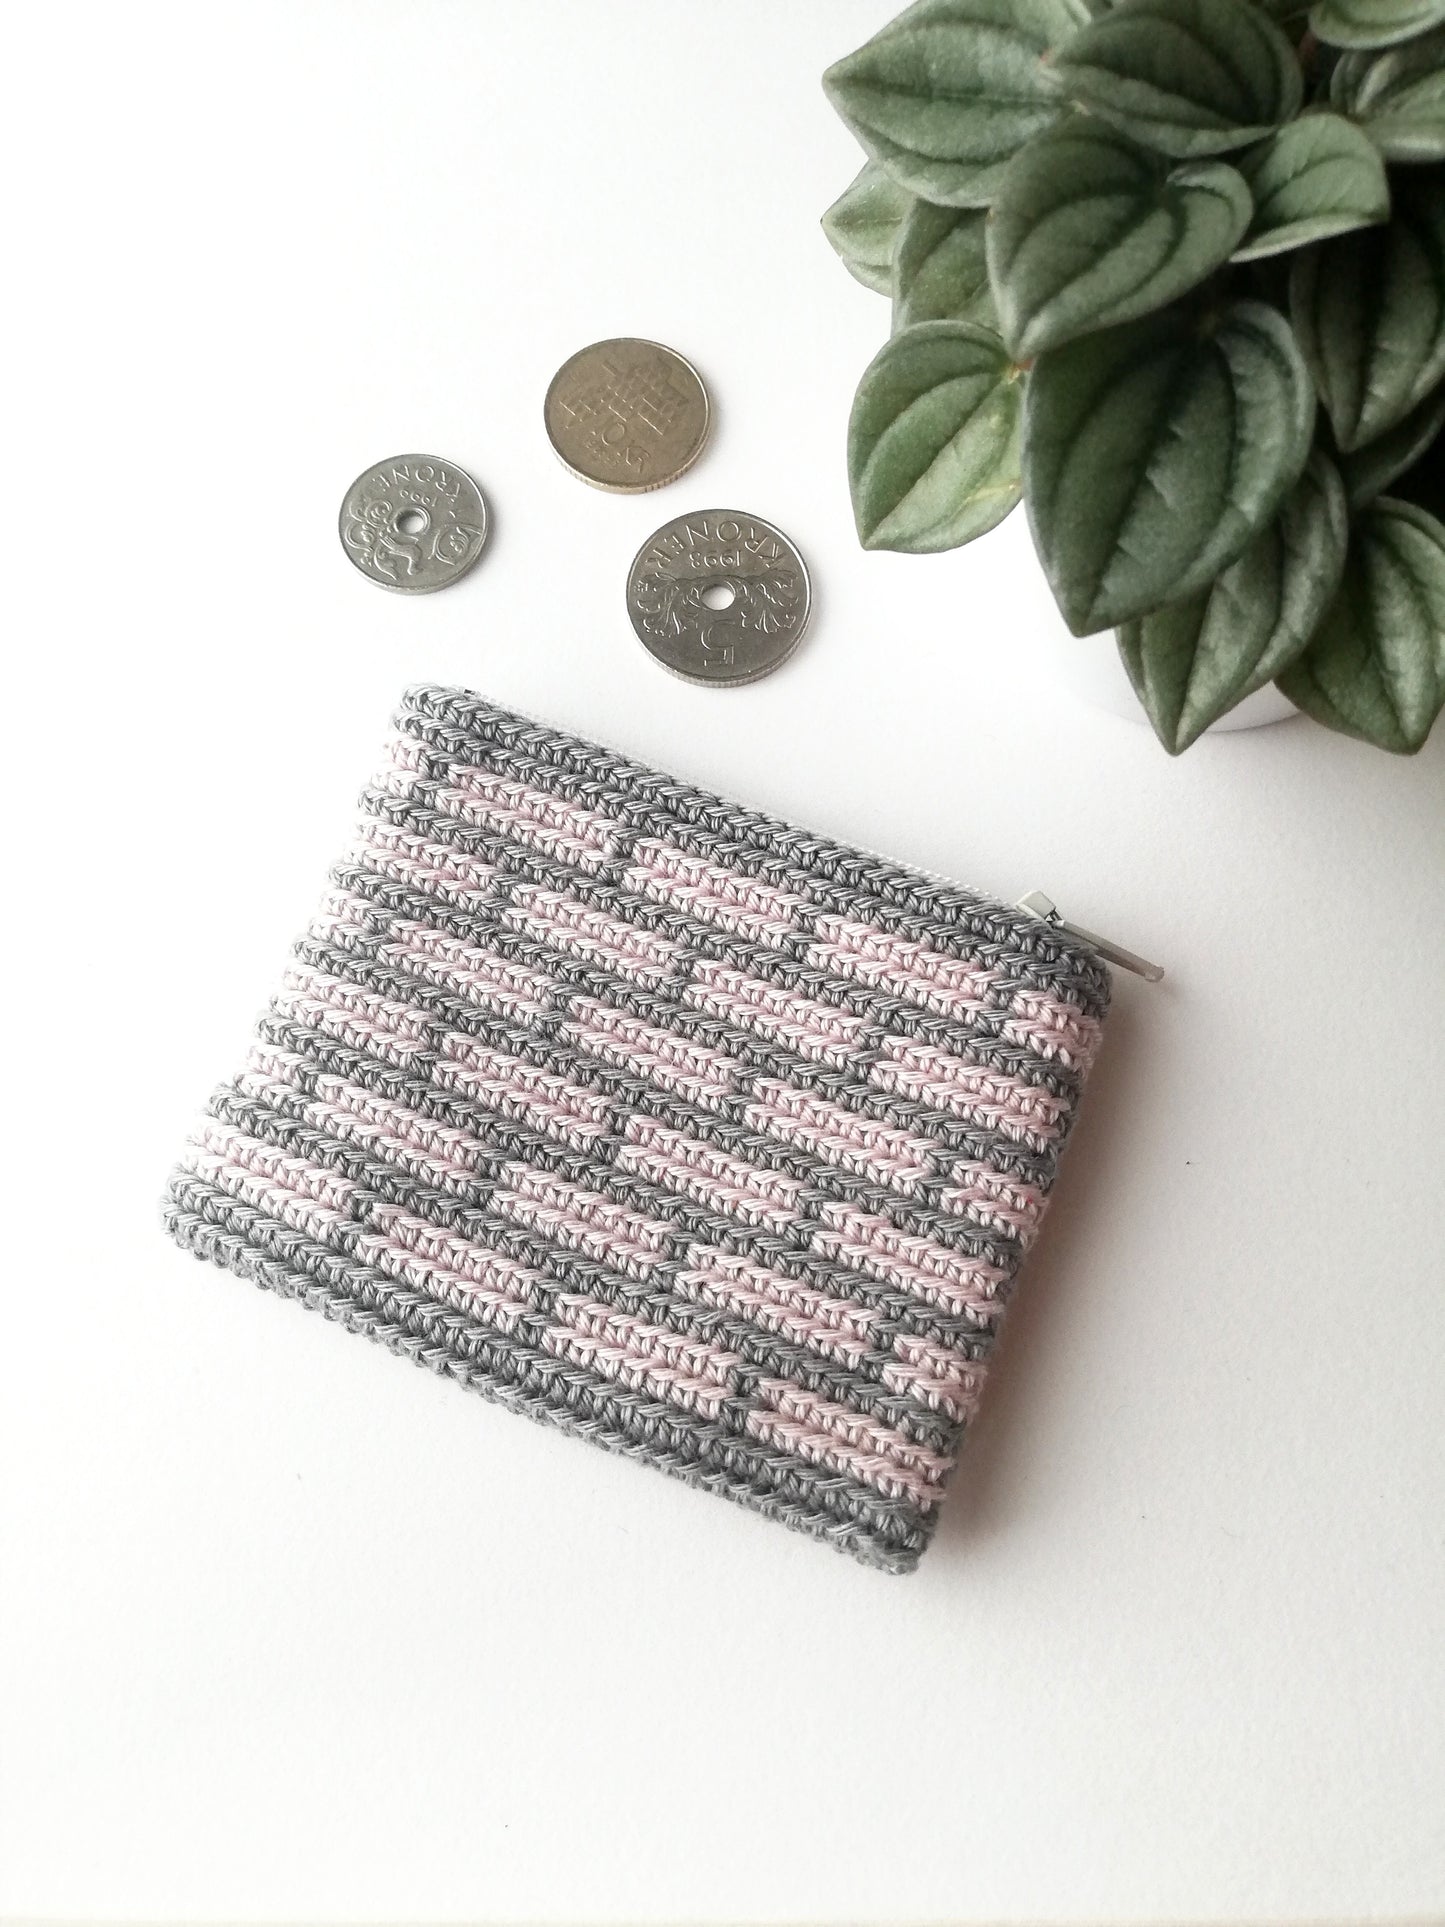 Crochet pattern: Zipper pouch with bricks